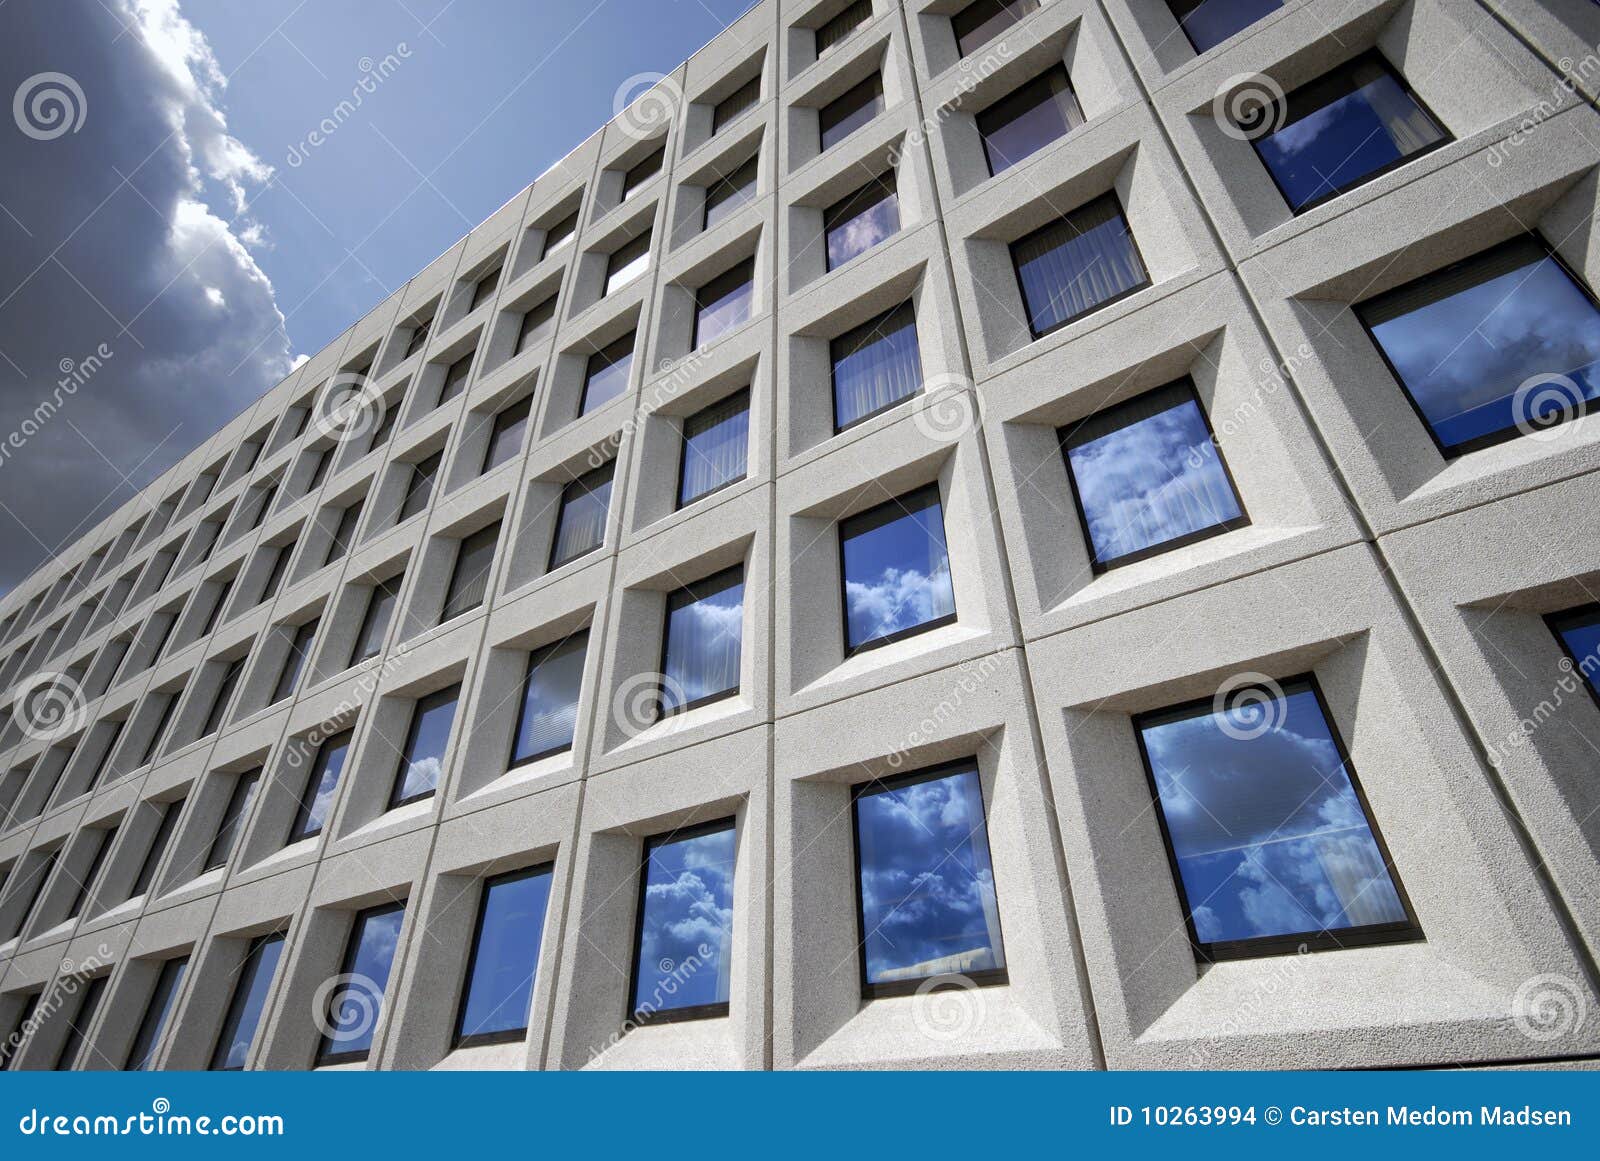 Sky blue windows stock photo. Image of zealand, facade - 10263994